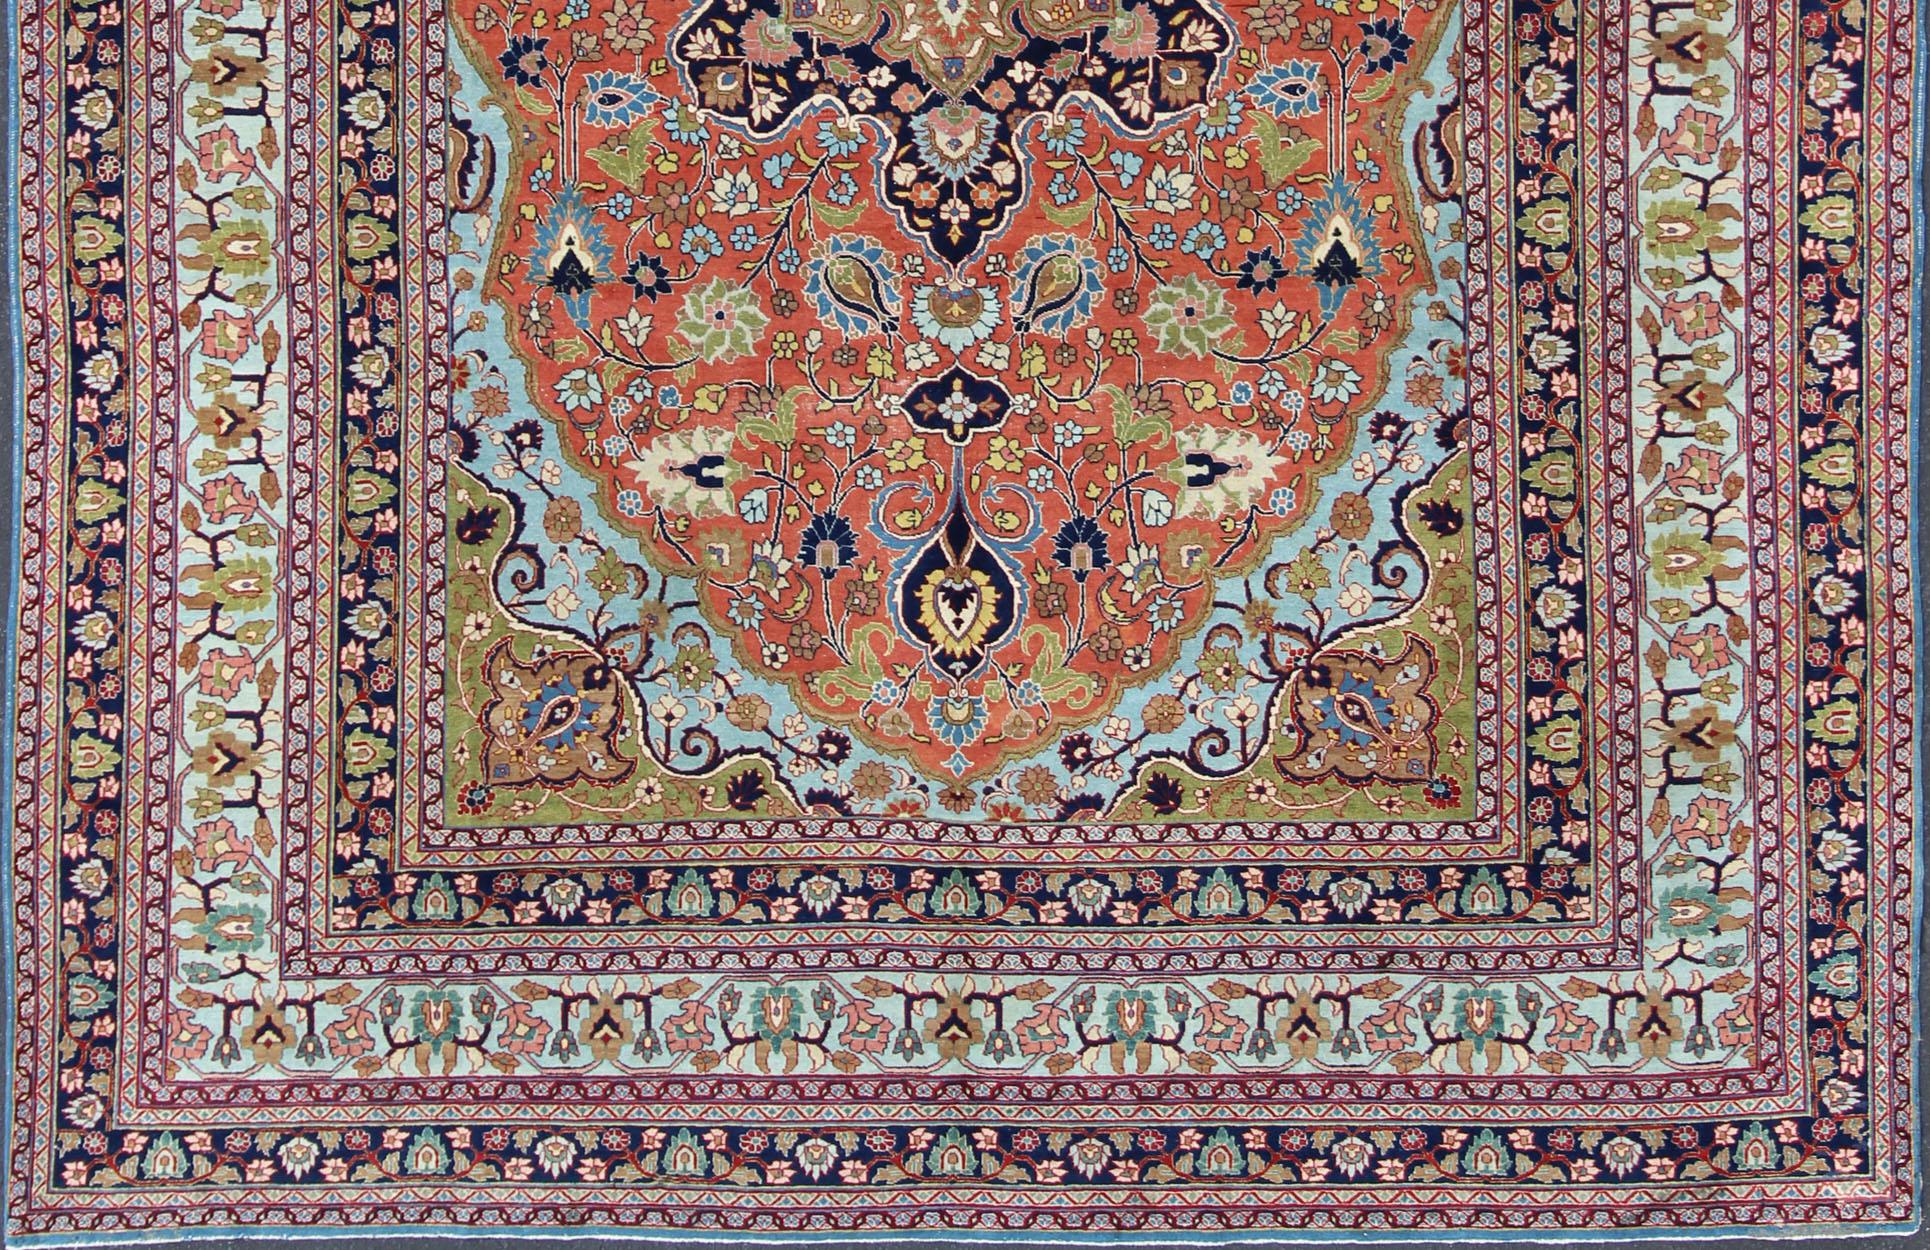 Indonesian Antique Fine Persian Classic Design Tabriz Rug in Orange, Blue & Multi Colors For Sale